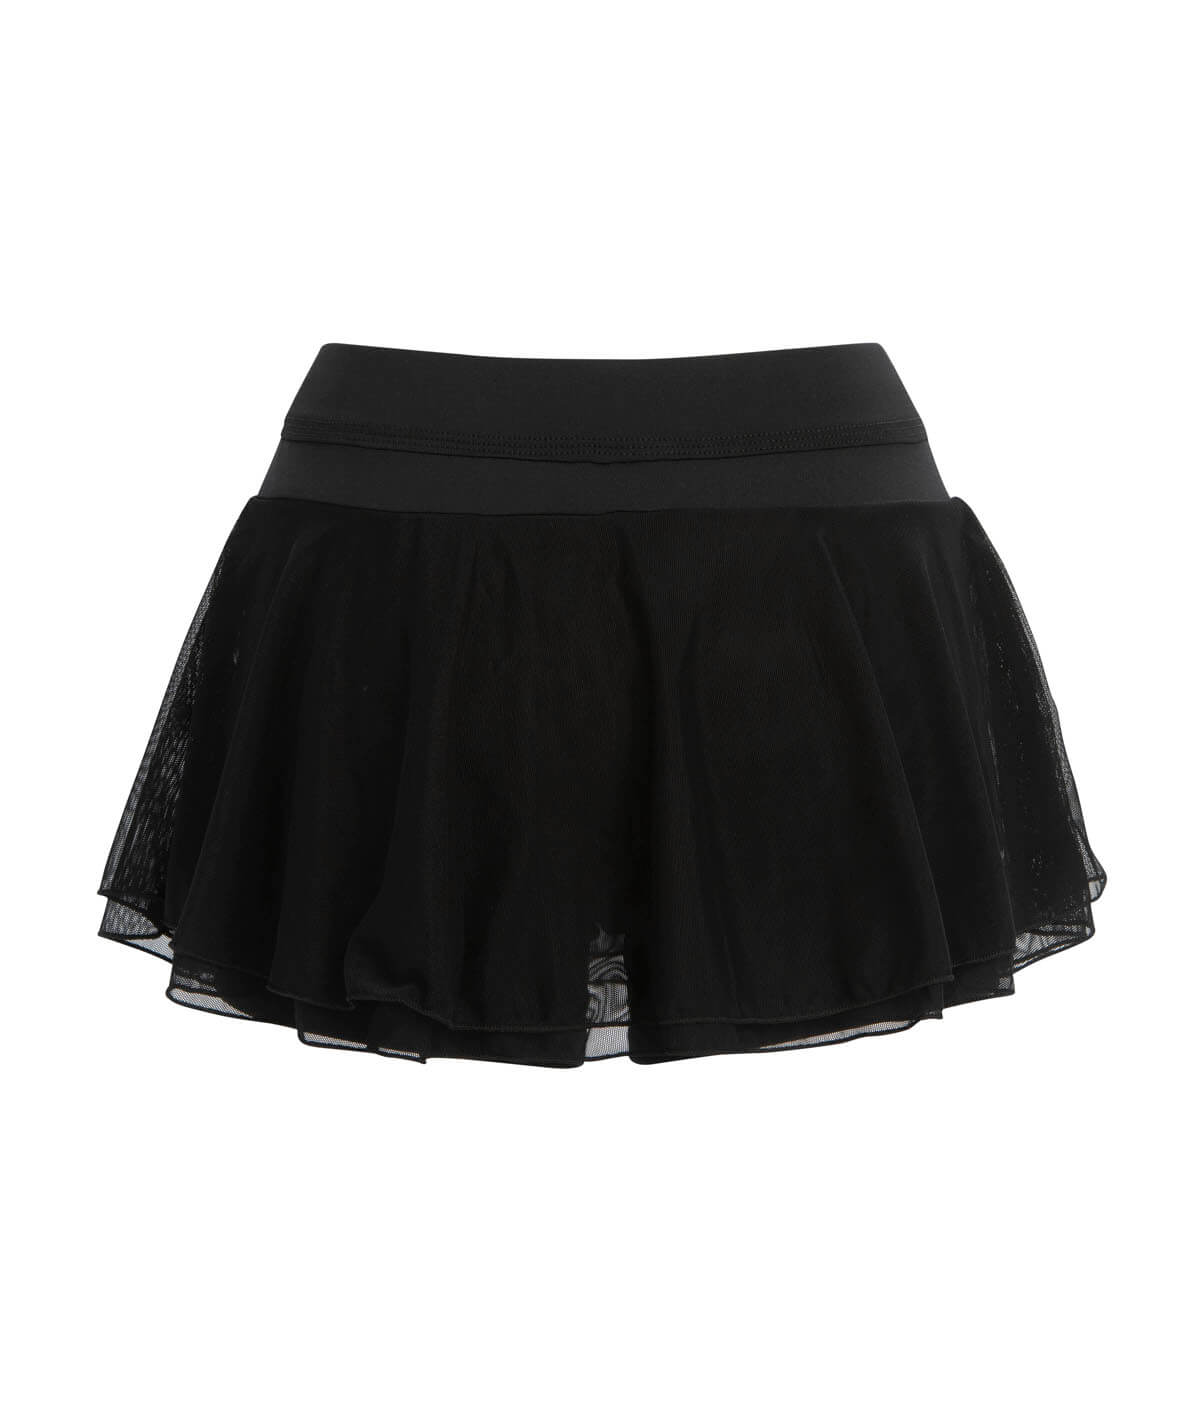 GK All Star Double-Layer Flutter Skirt - Cheer Uniforms | Omni Cheer